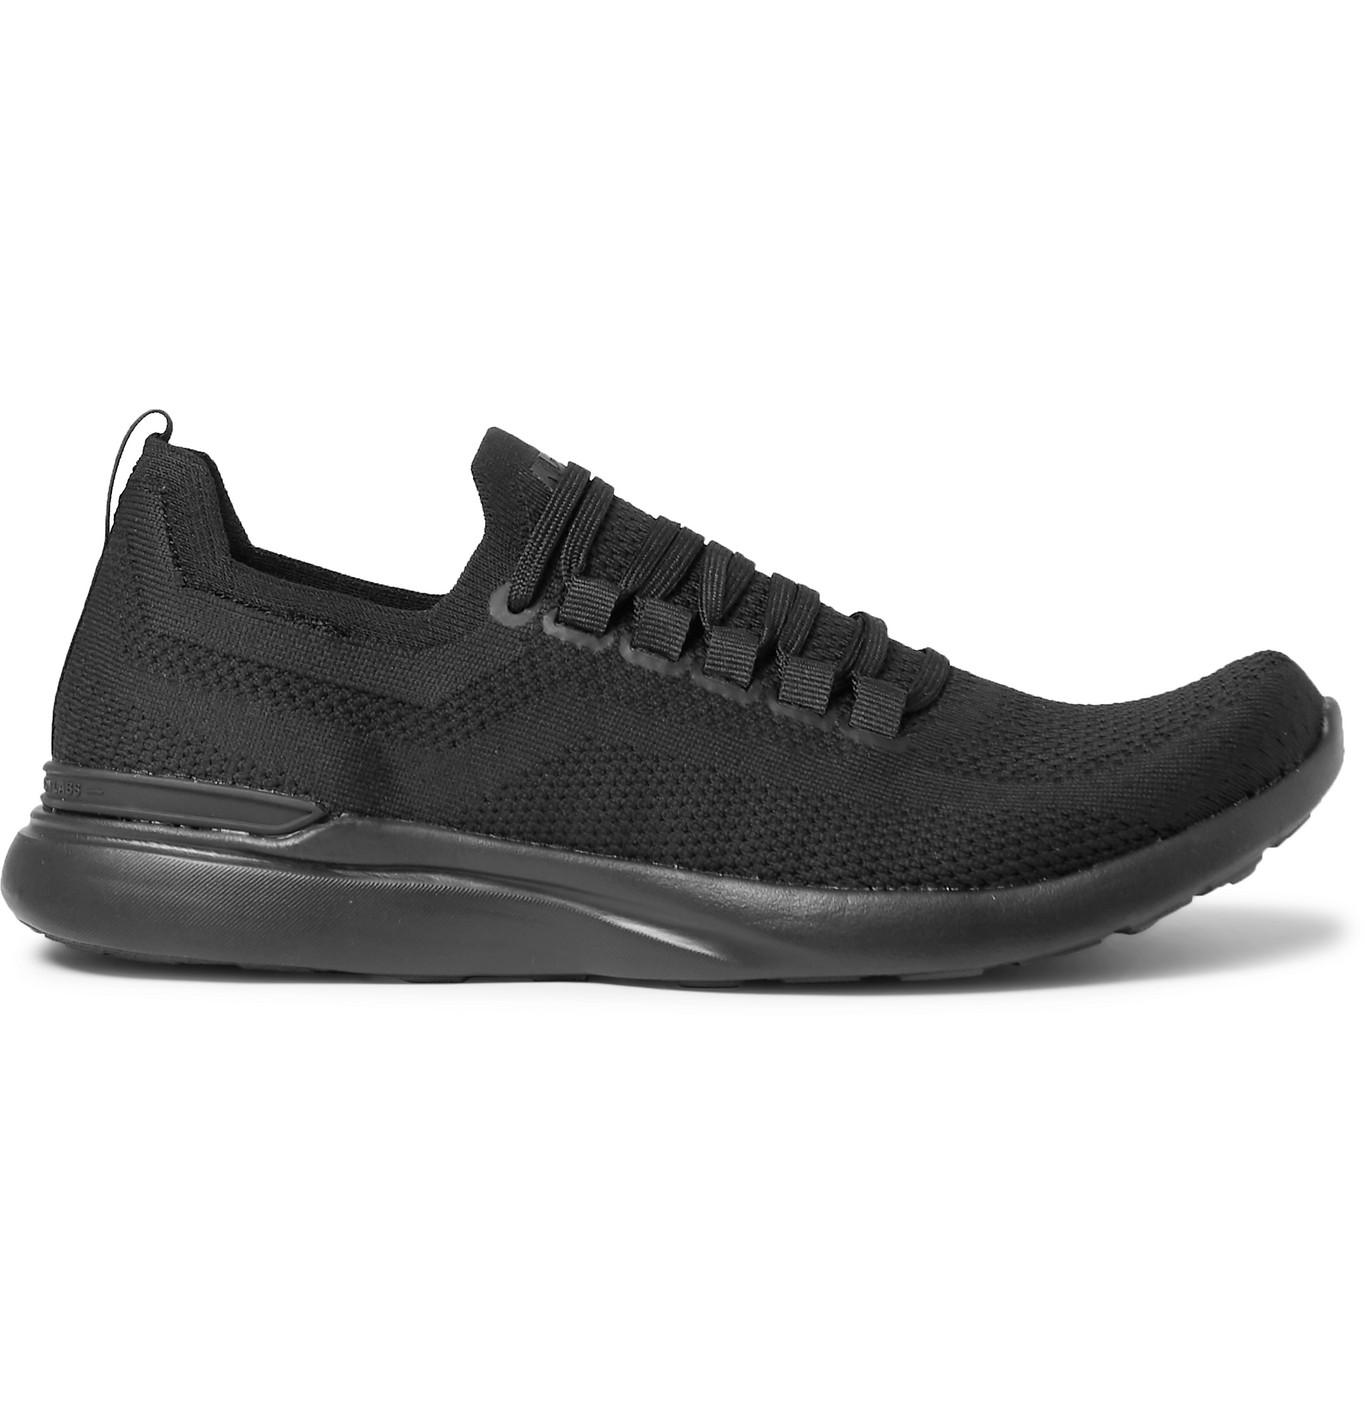 APL Shoes Breeze Techloom Running Sneakers in Black for Men - Lyst